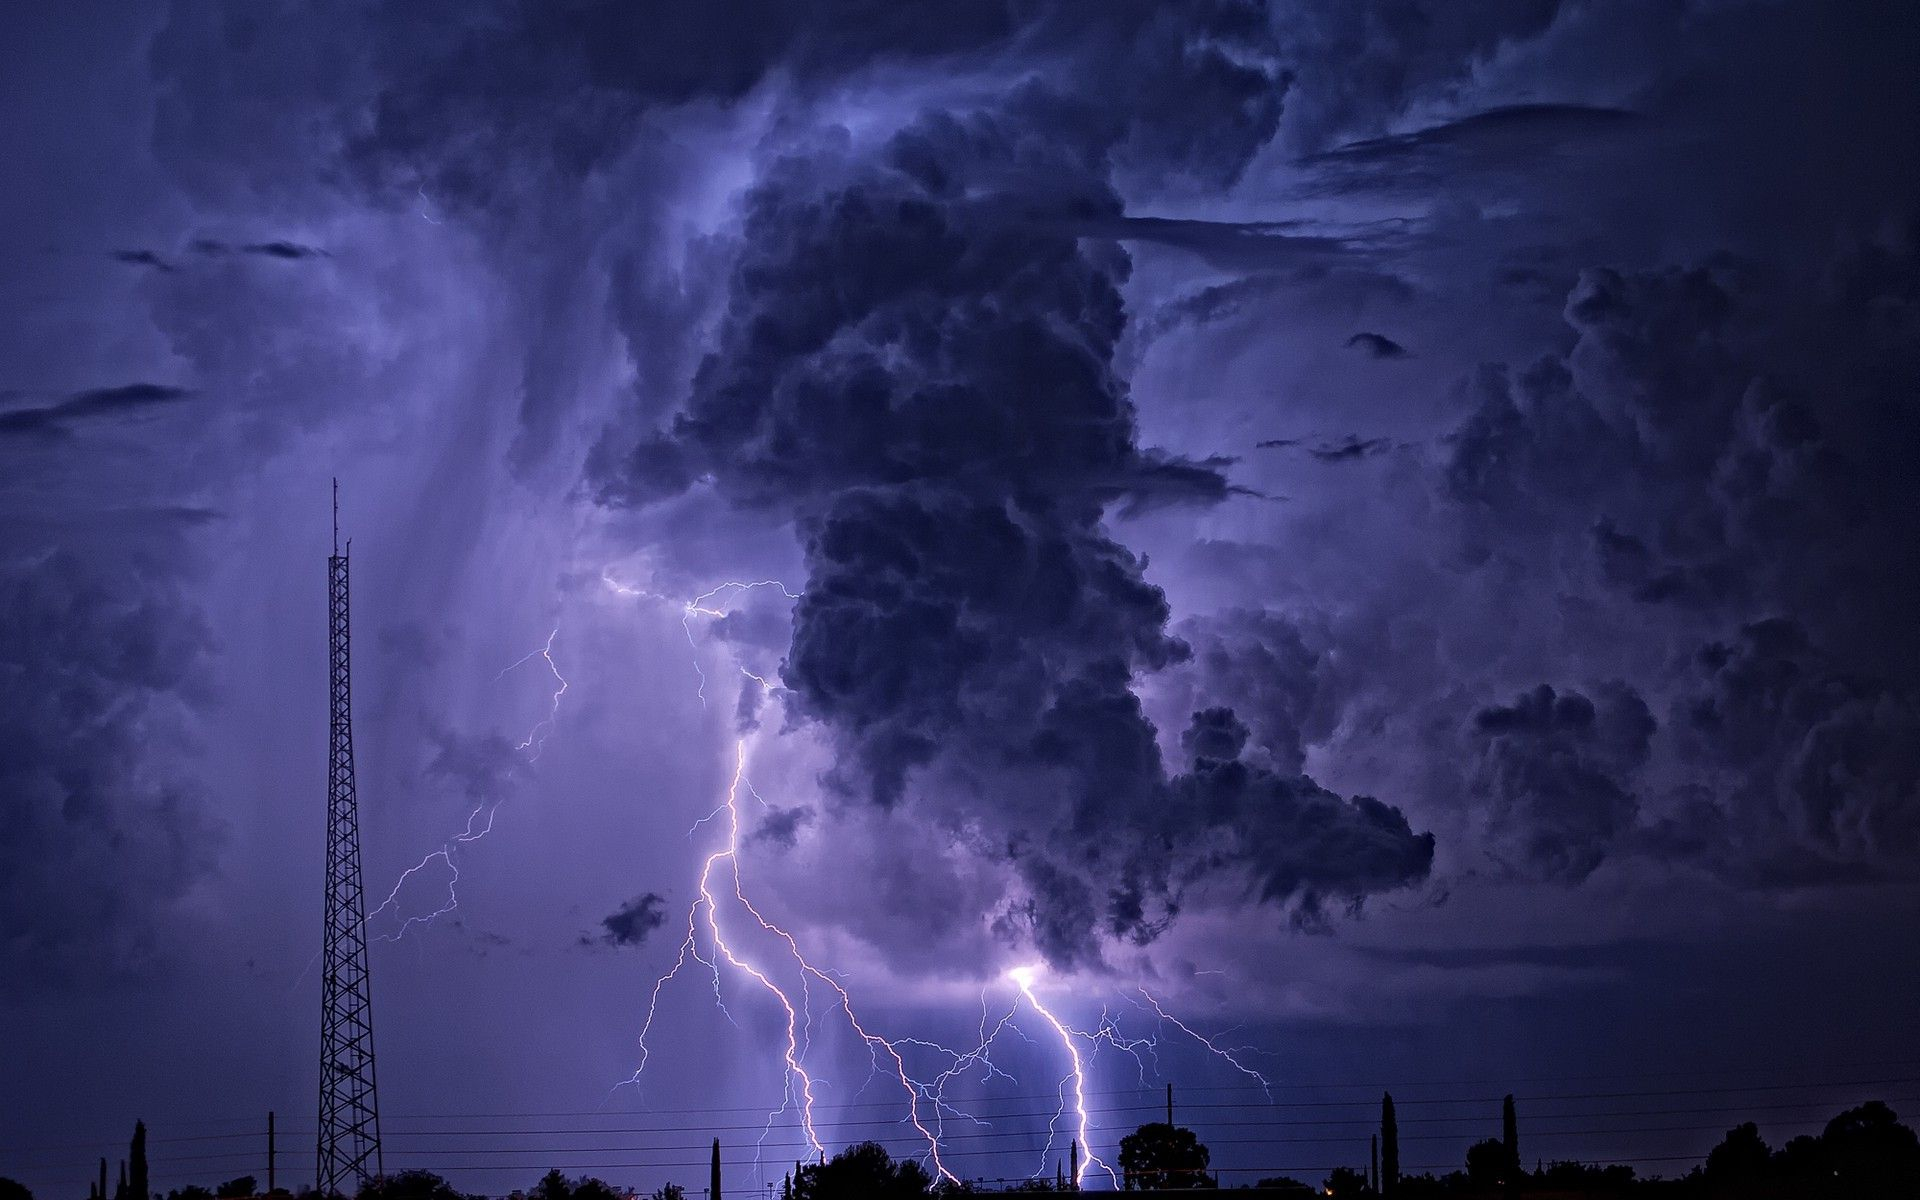 1920x1200 tornado, Thunder, Lightning, Storm, Nature Wallpapers HD / Desktop ... | Lightning storm, Storm wallpaper, Thunder and lightning storm